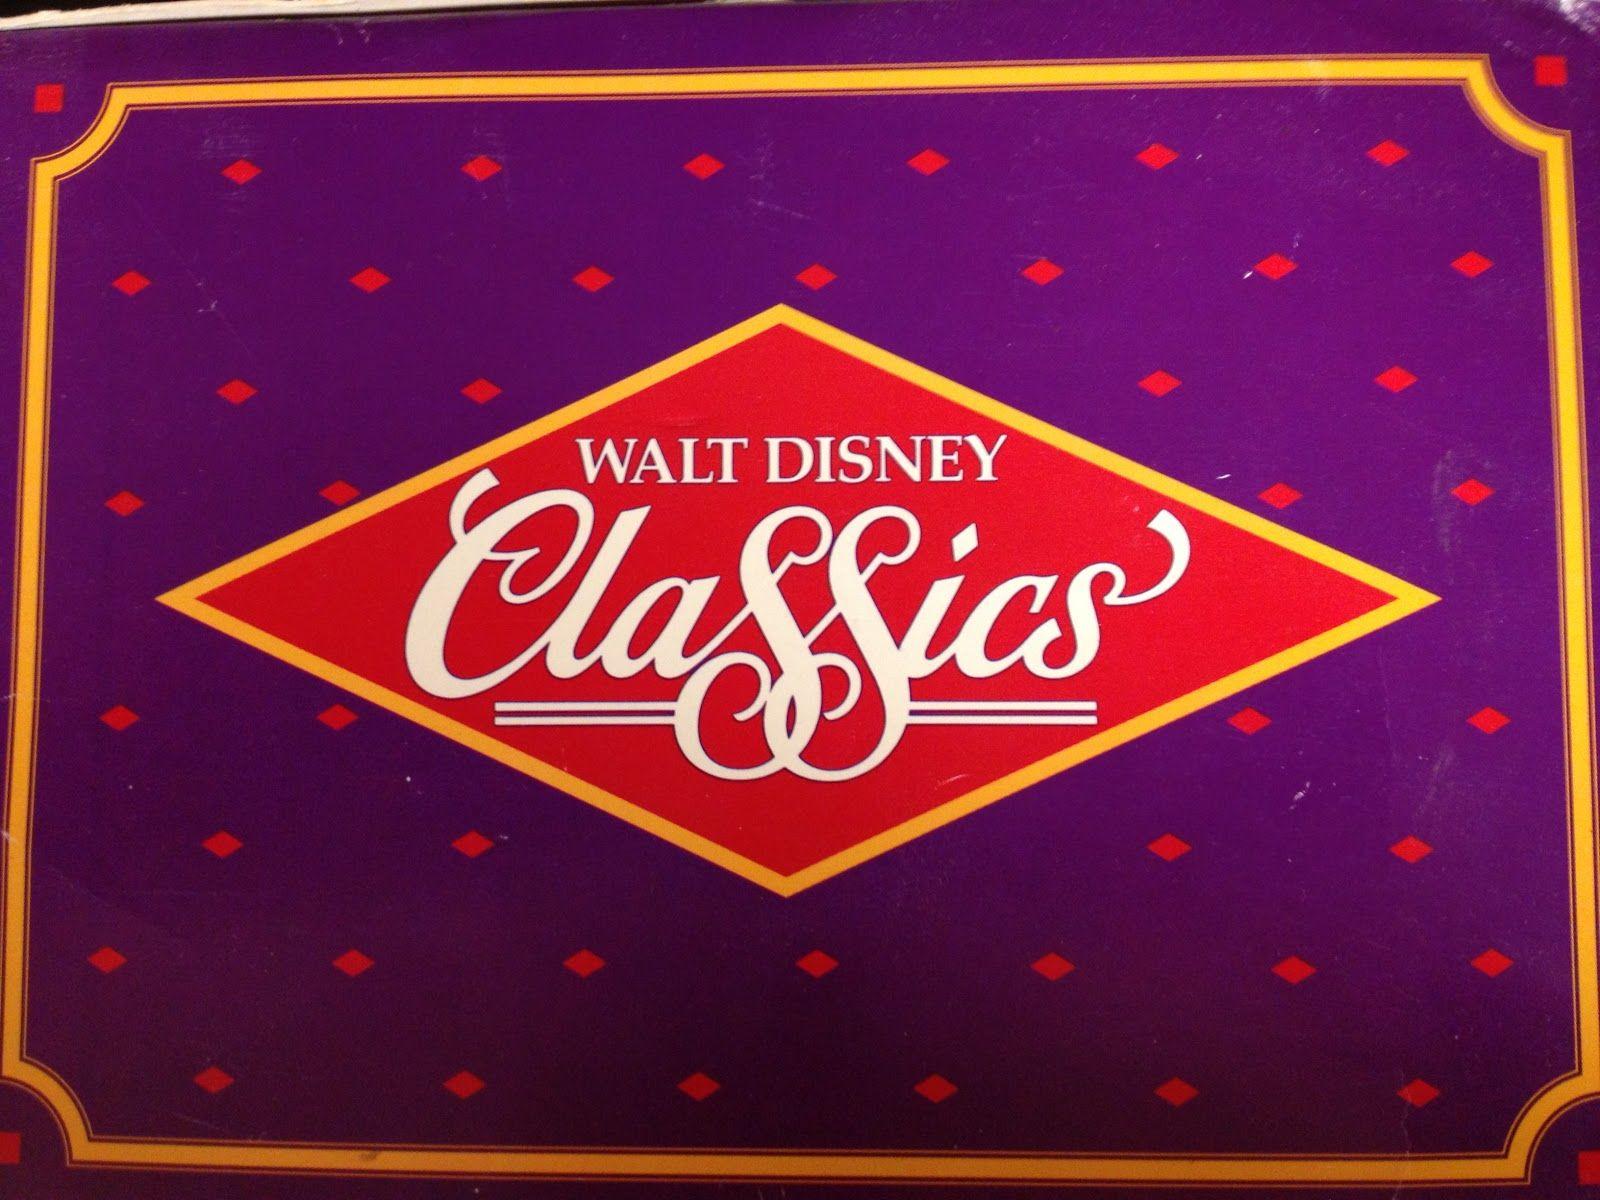 Walt Disney Classics VHS Logo - Image - Photo-42.JPG | Logopedia | FANDOM powered by Wikia